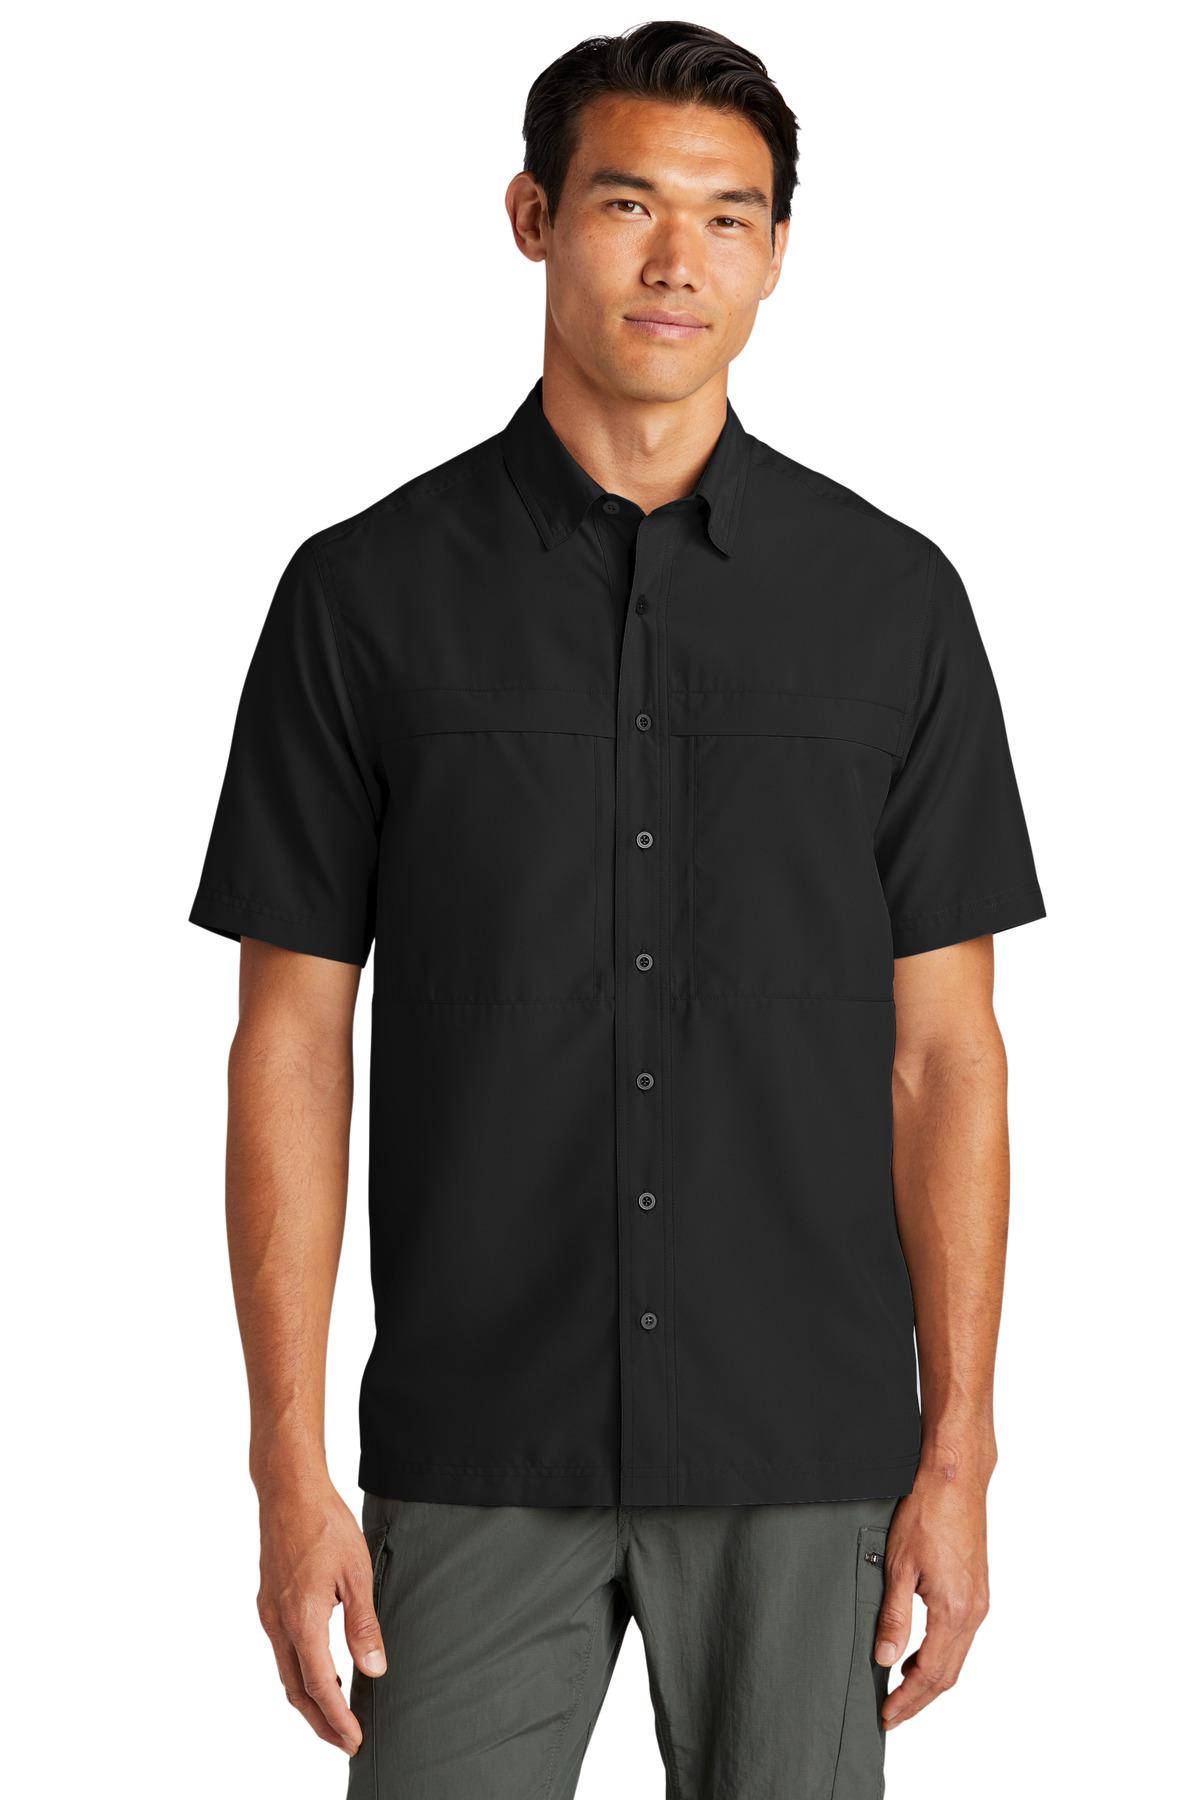 Port Authority W961 Short Sleeve UV Daybreak Shirt - Shirtmax